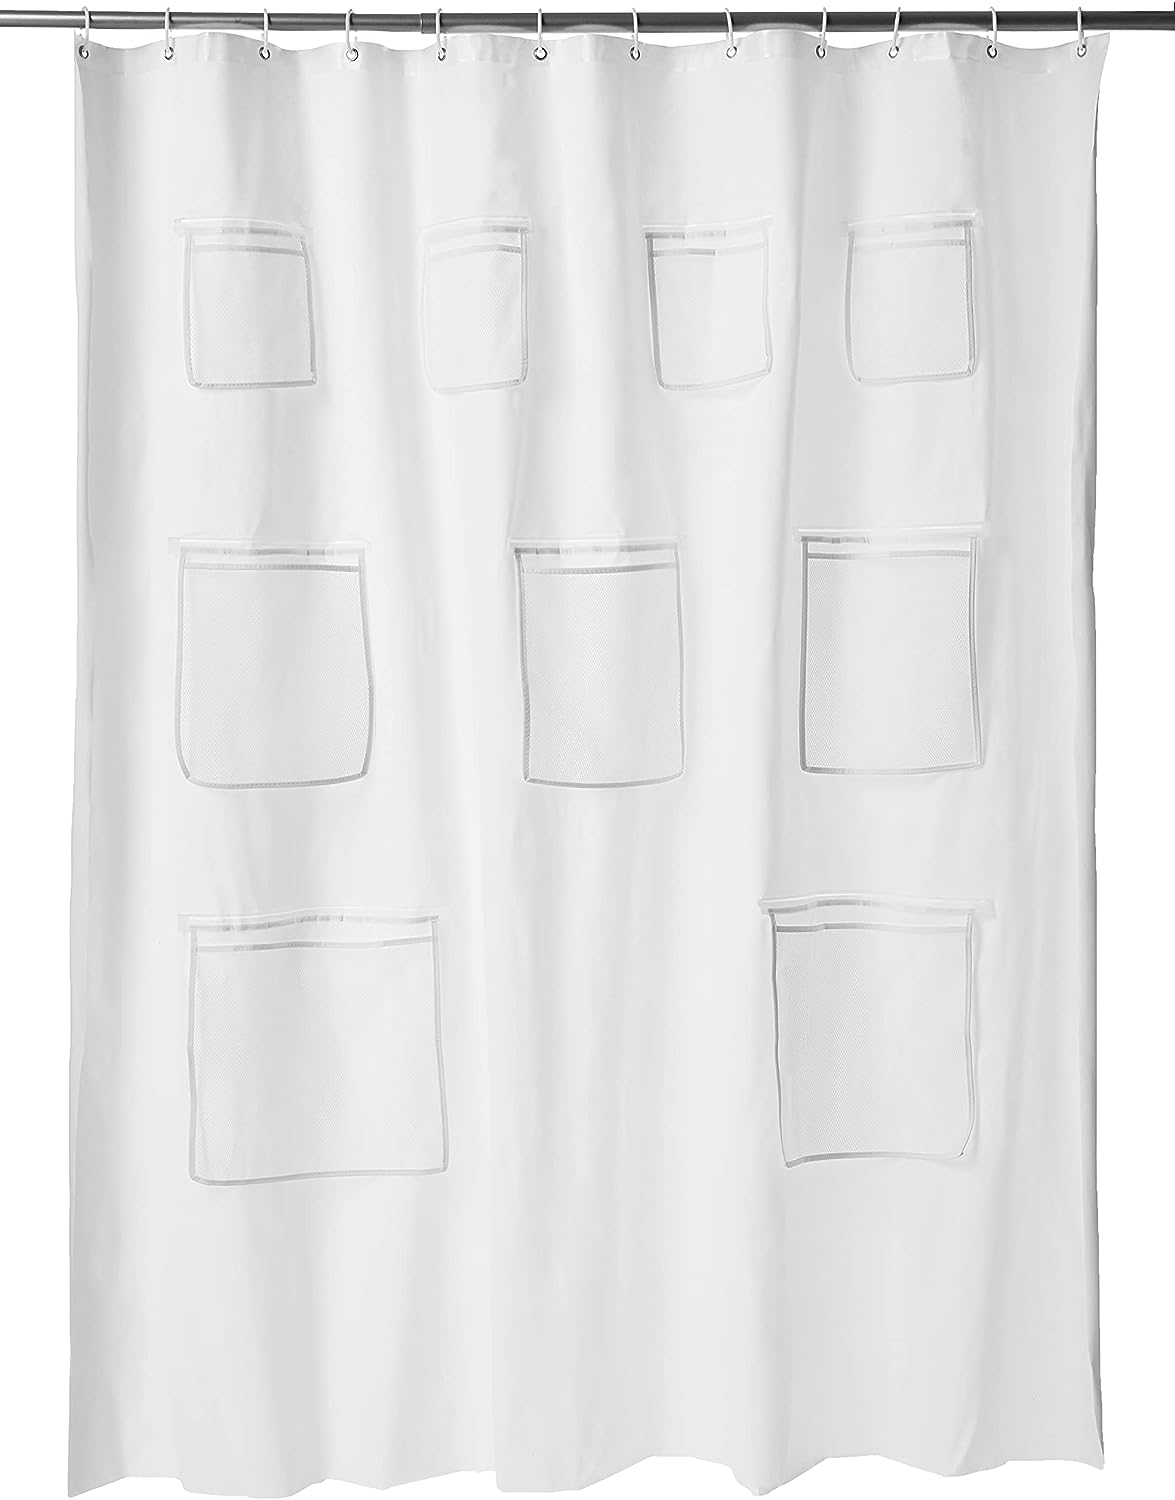 Amazon Basics 8-Gauge PEVA Shower Curtain or Liner [...]